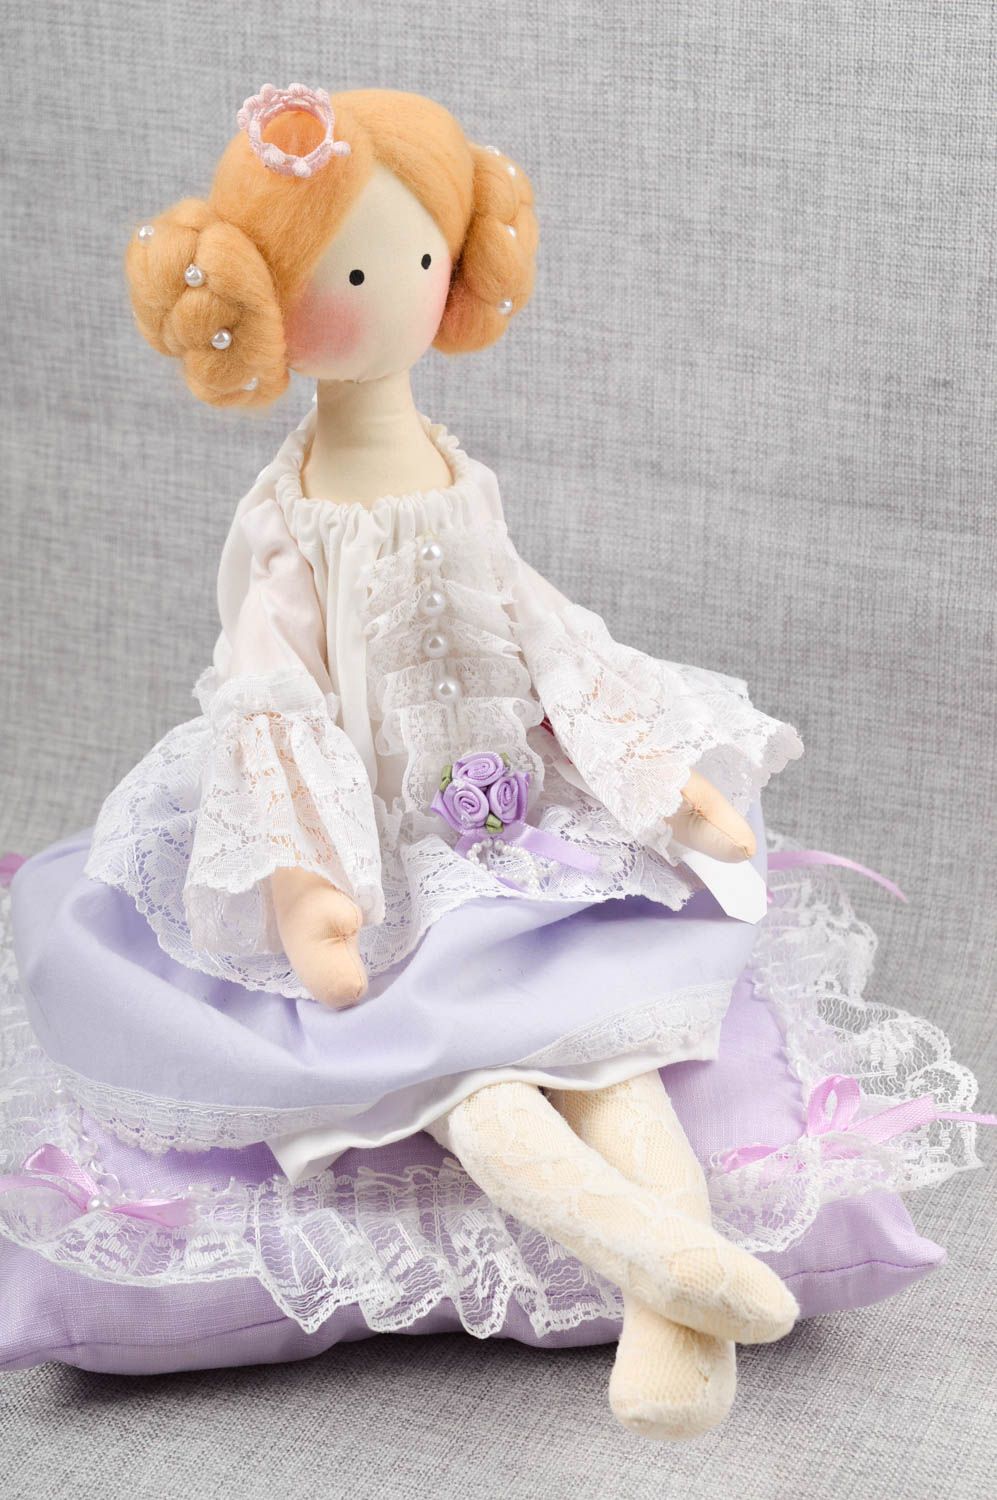 Beautiful handmade rag doll stuffed toy cute soft toys decorative use only photo 1